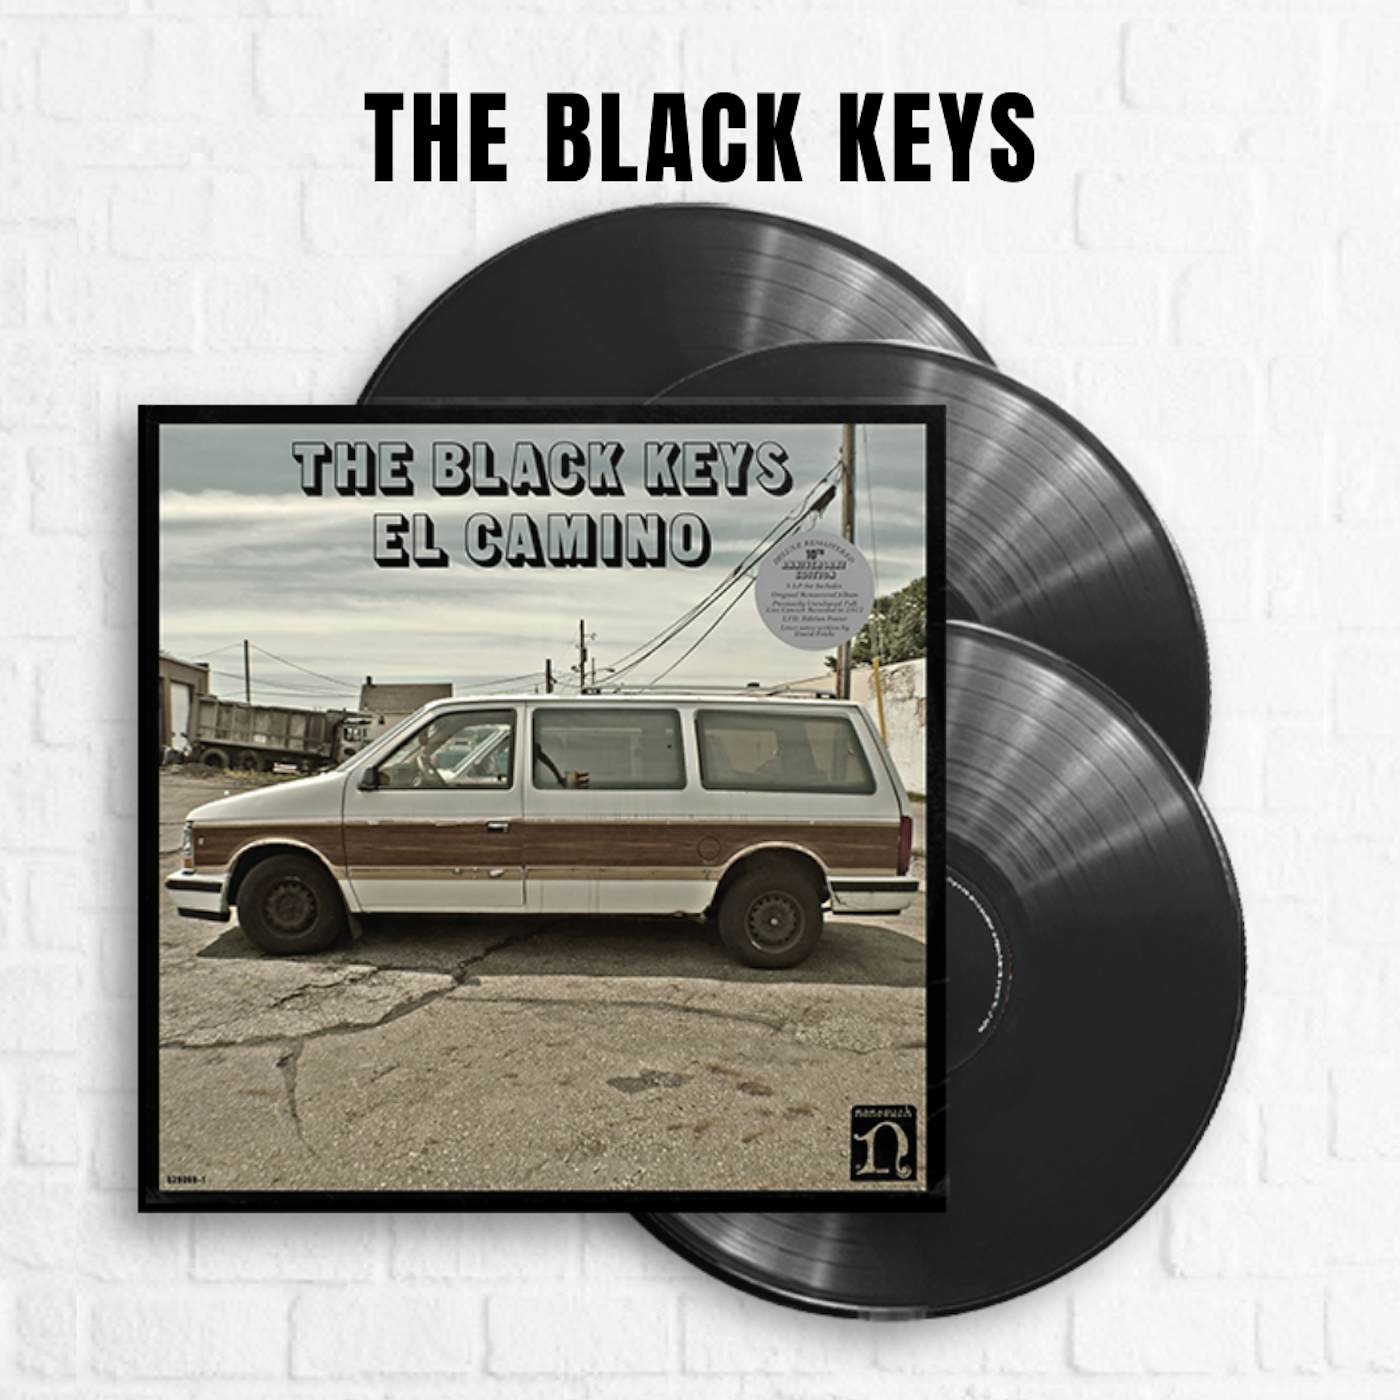 The Black Keys ‎- El Camino 3 x LP DELUXE EDITION VINYL RECORD - Blue Van  Cover 